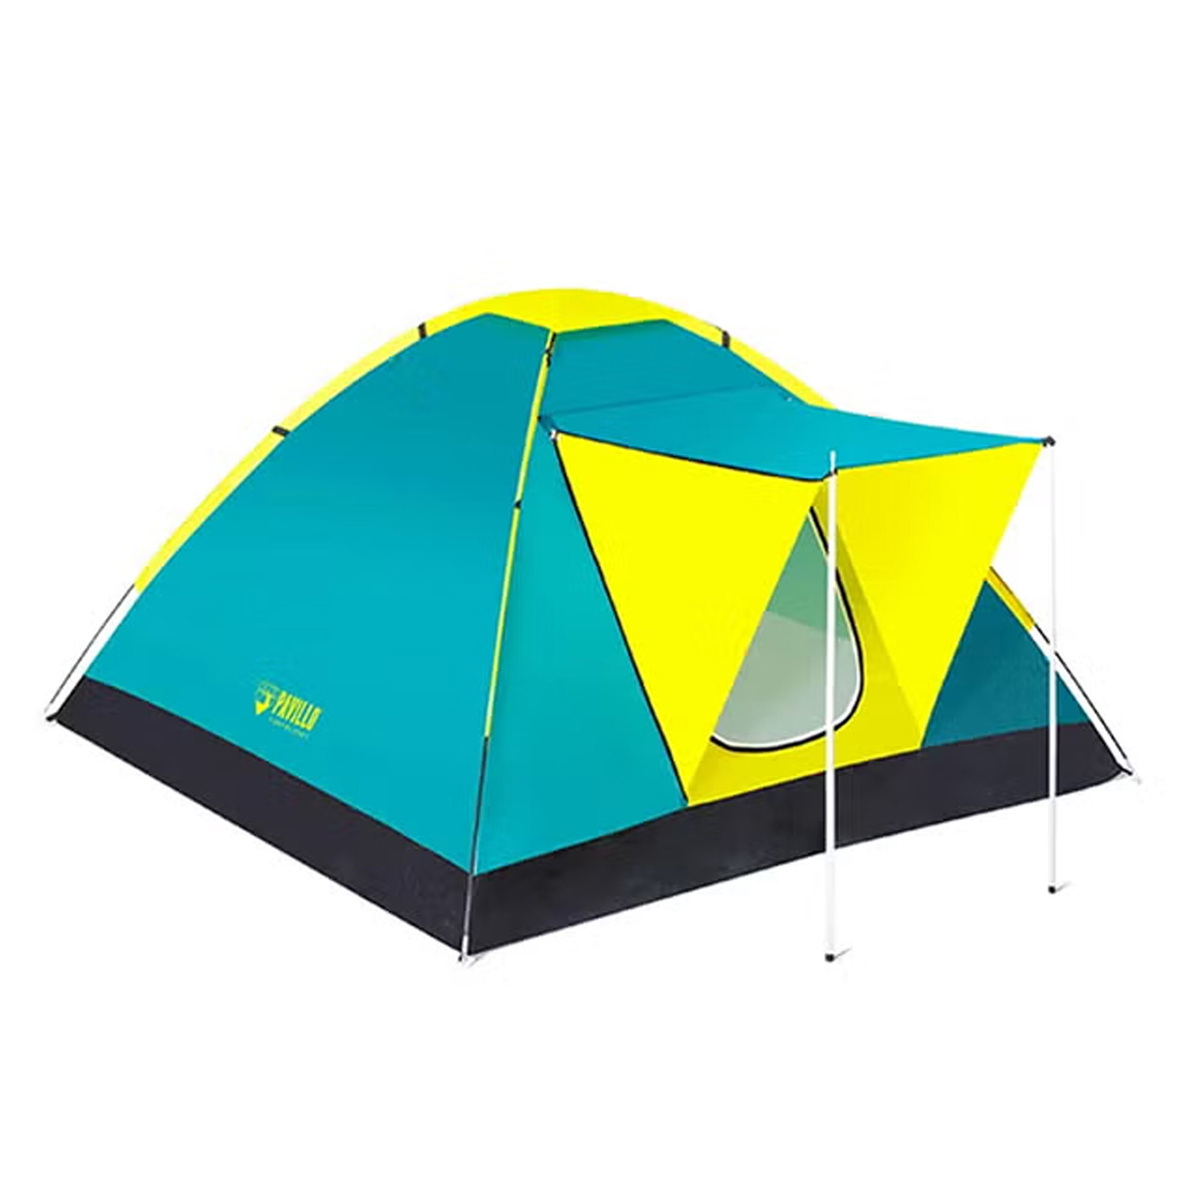 Best Way Pavillo Coolground 3 Person Tent, 210 x 210 x 120 cm, 68088